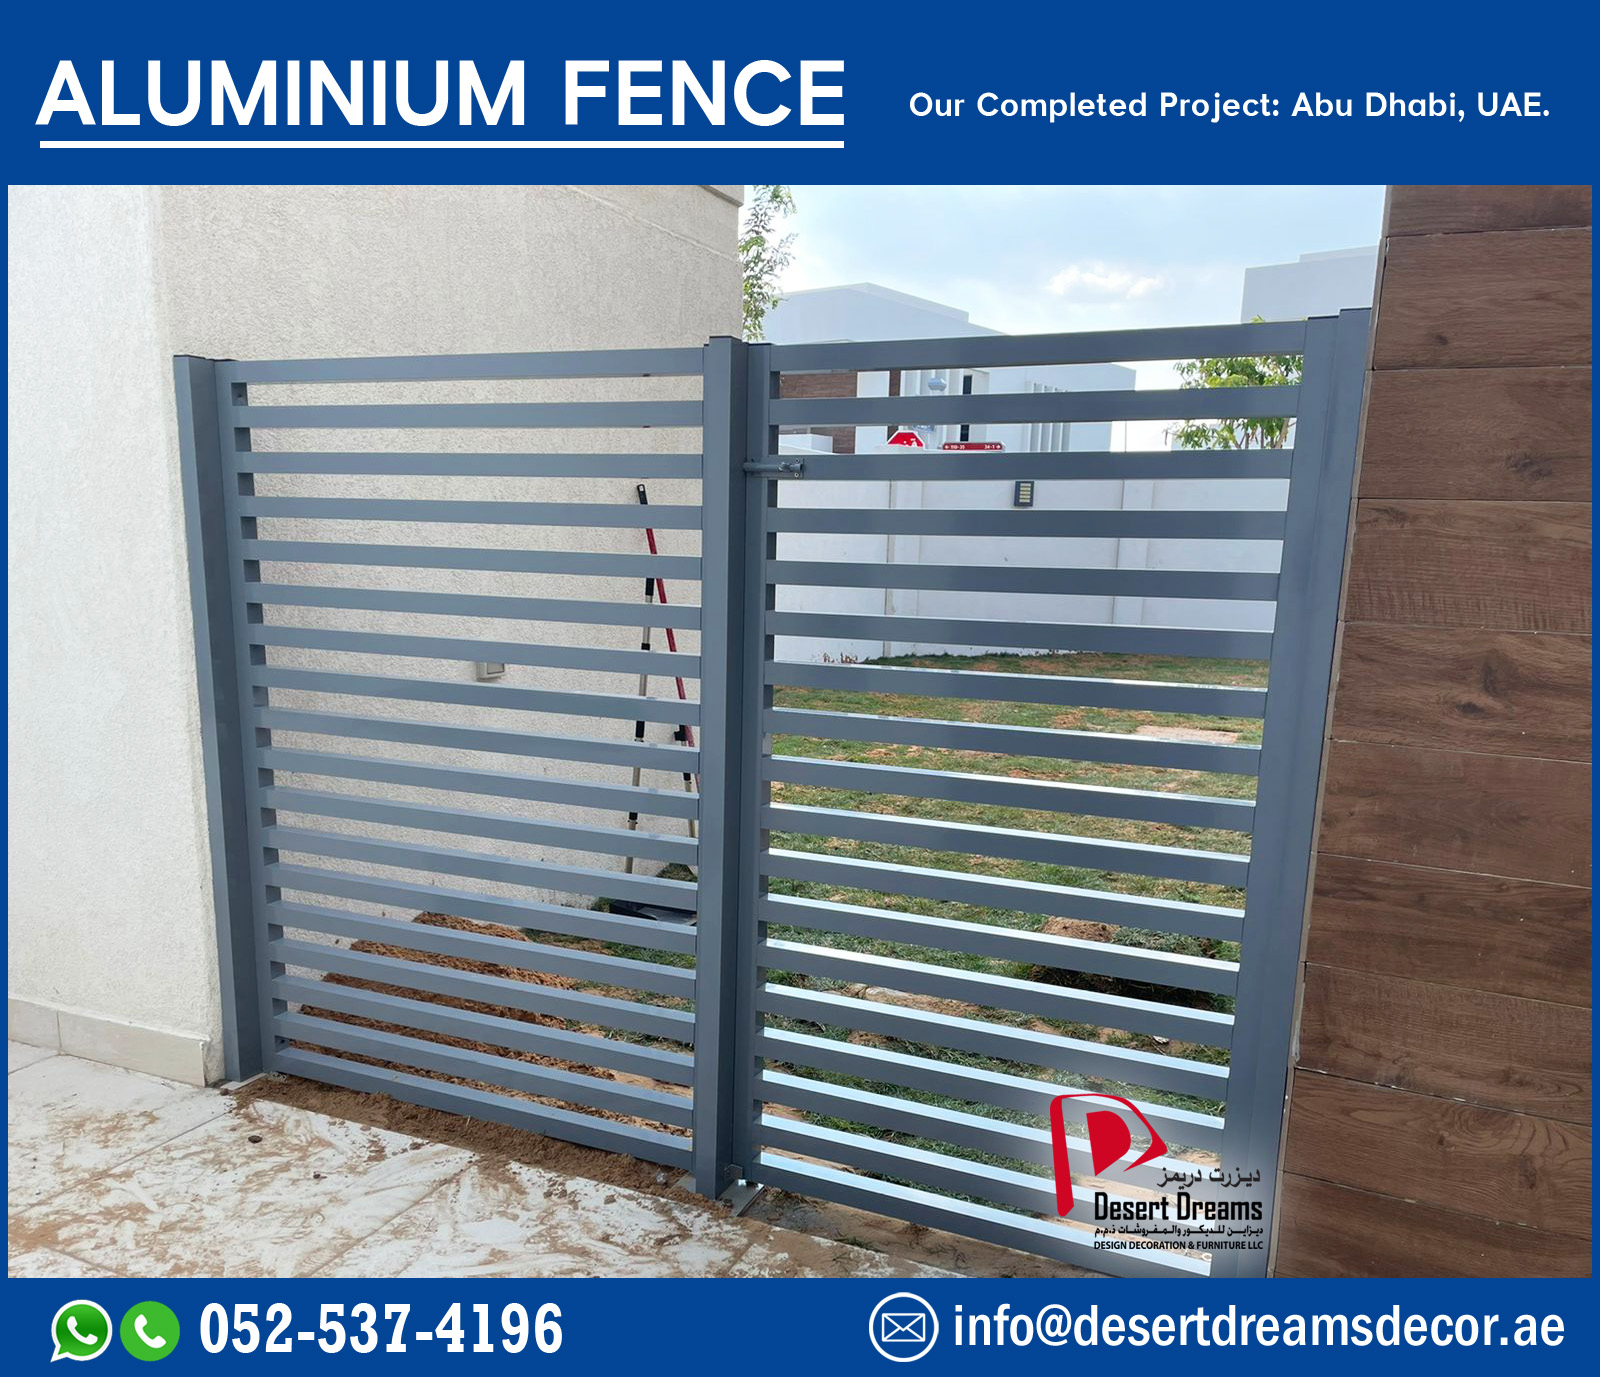 Aluminium fence dubai, aluminium fence uae, aluminium fence abu dhabi (6).jpg